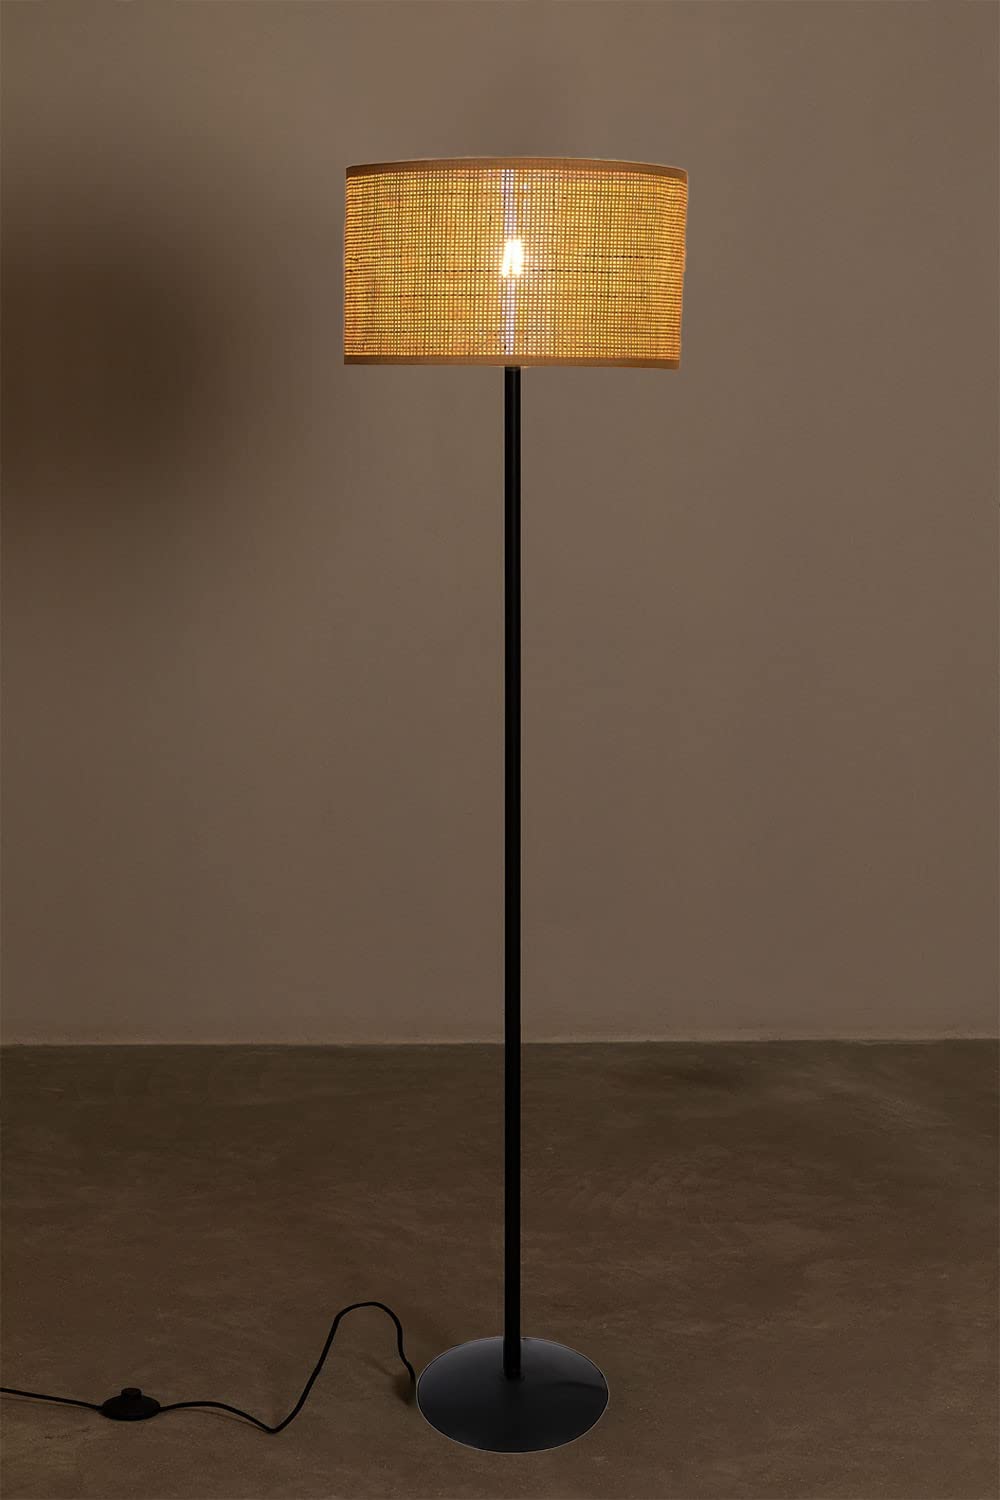 AKWAY Rattan Cane Webbing Floor Lamp Bamboo Floor Lamp Cane Floor Lamp Standing Lamp Wooden Standing lamp for Living Room Bedroom (14" D X 8")(Black Stand) (Square Webbing) - Akway